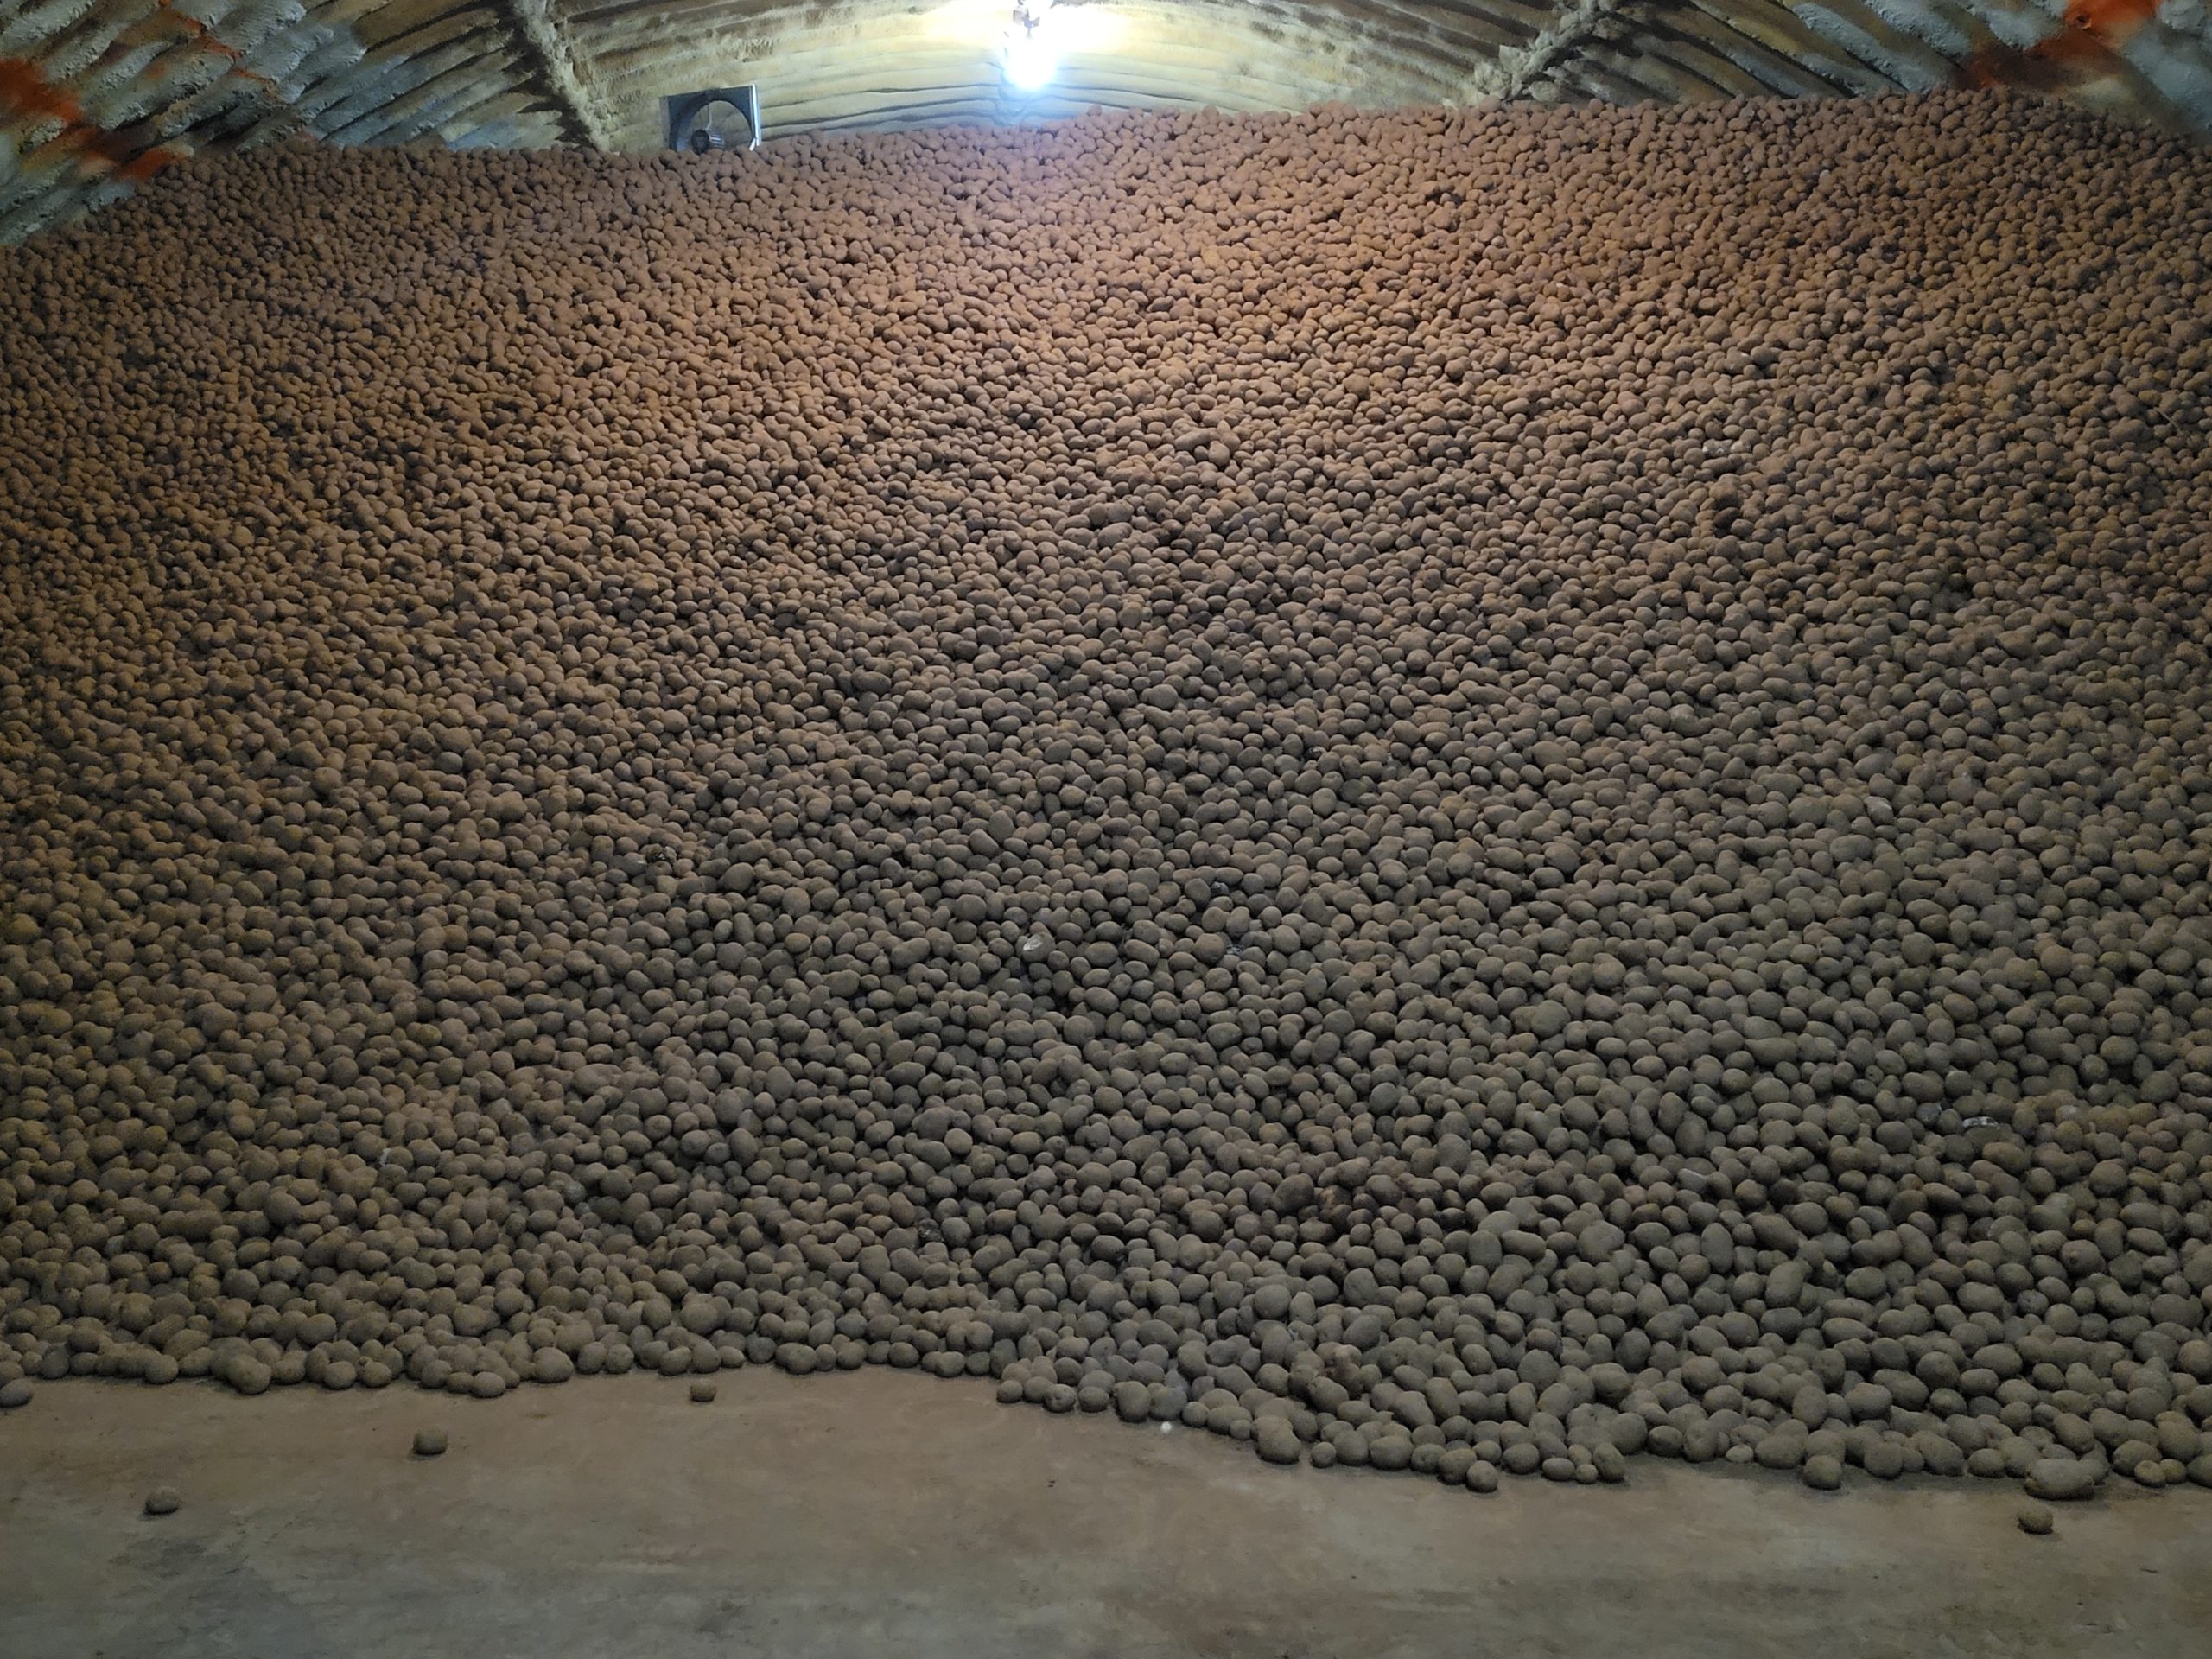 Victoria Potato Farm potato pile